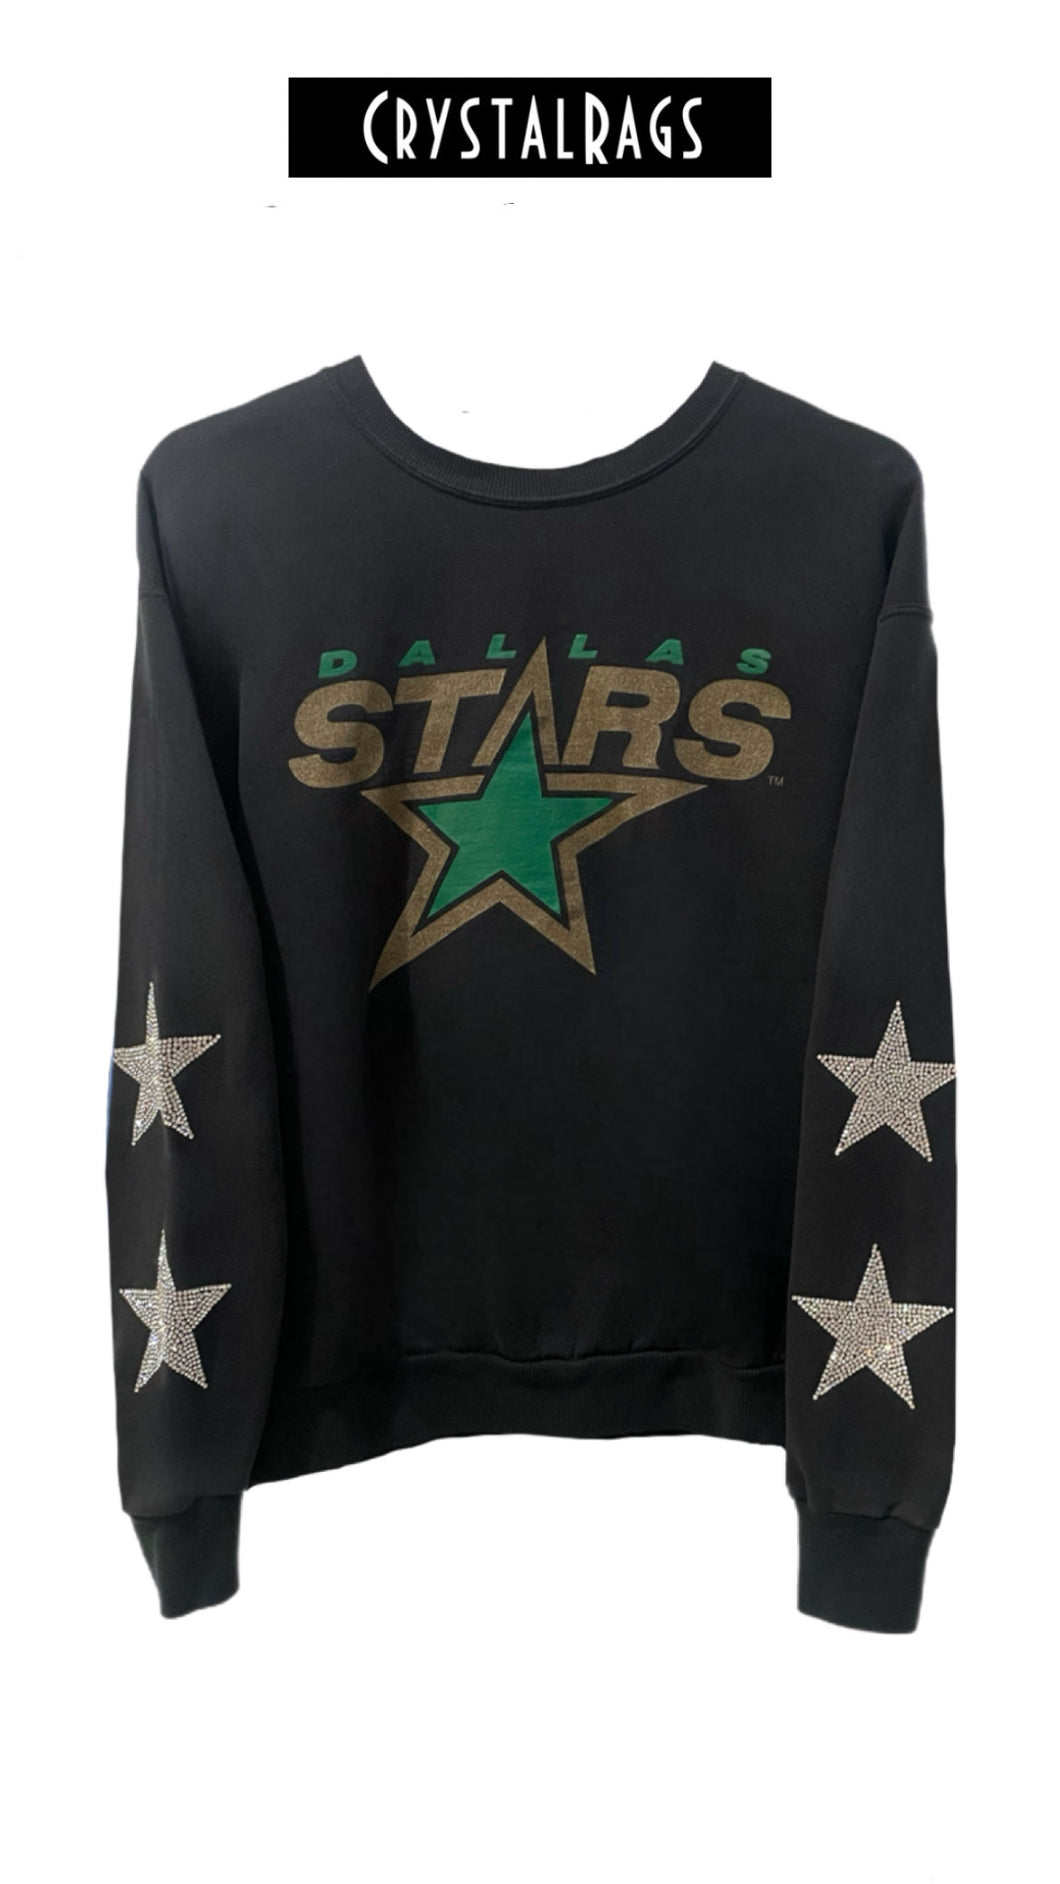 Dallas Stars, Hockey One of a KIND Vintage Sweatshirt with Crystal Stars Design